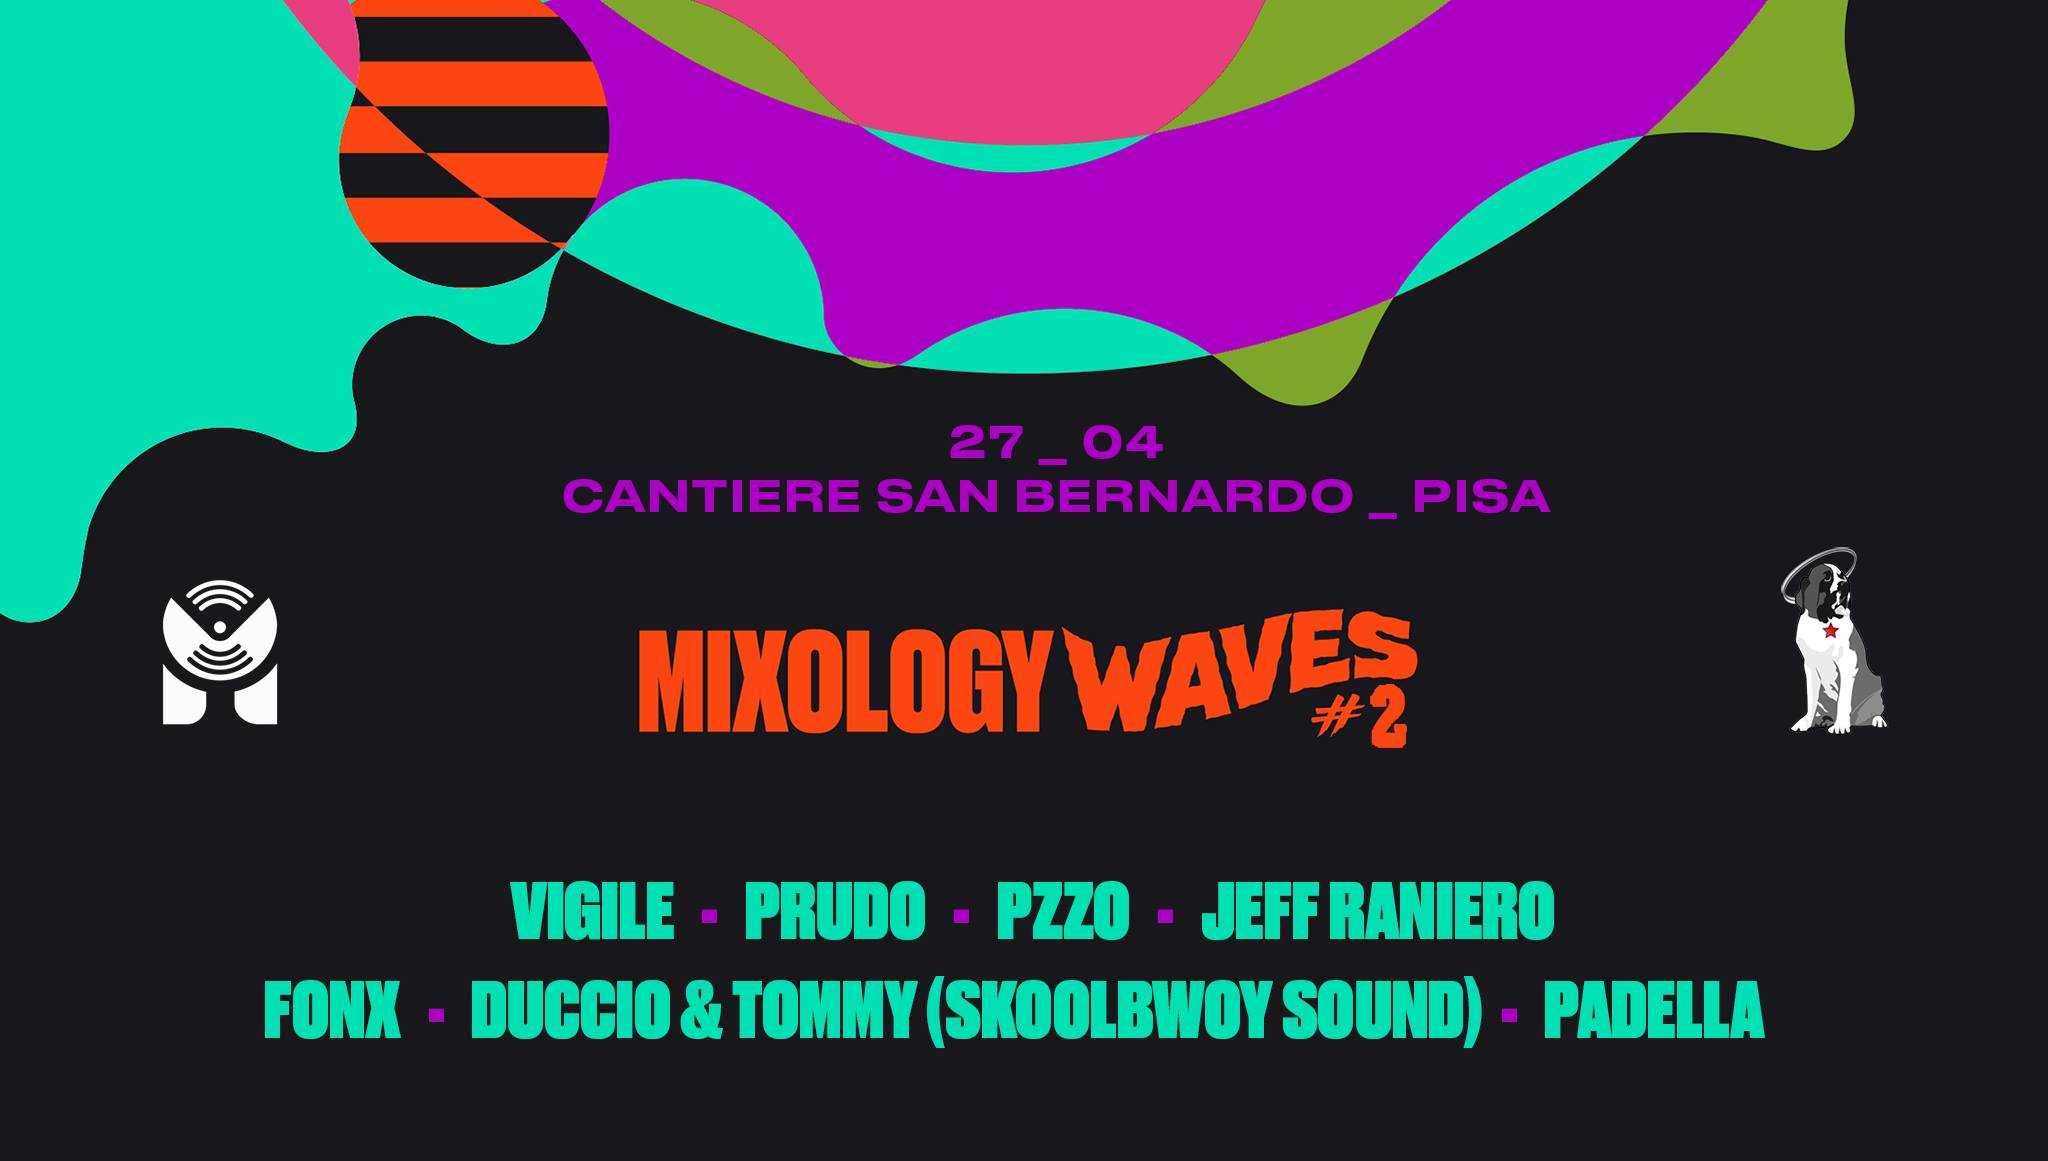 Mixology Waves #2. Nuovo appuntamento al Cantiere San Bernardo, Pisa